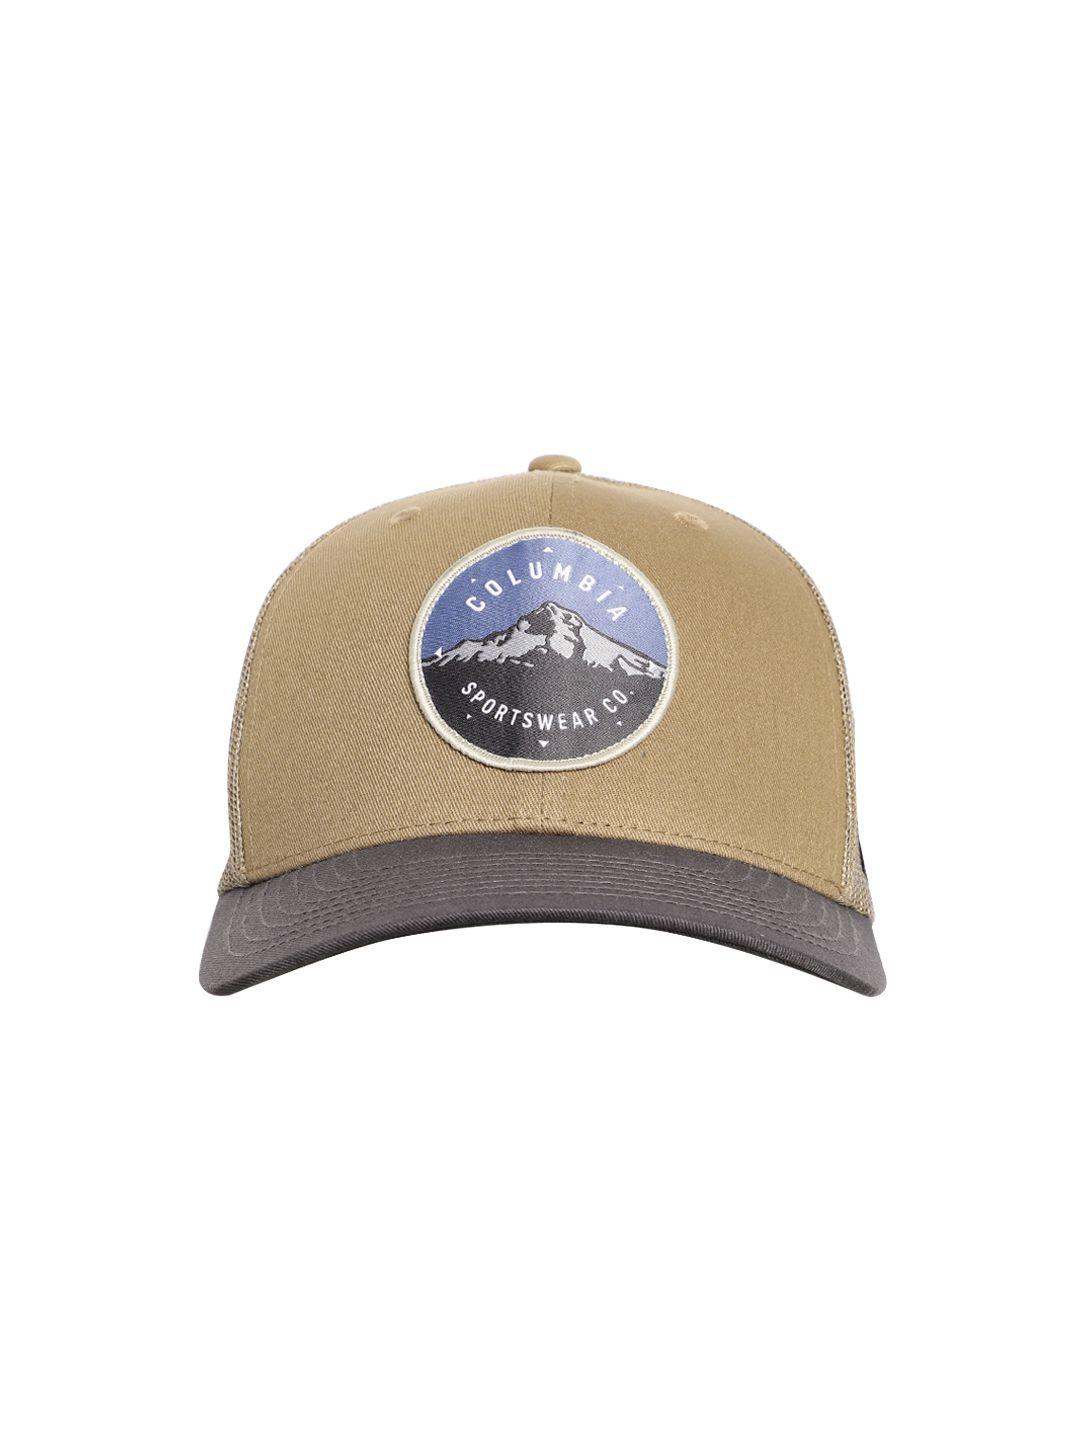 columbia unisex brown snapback cap